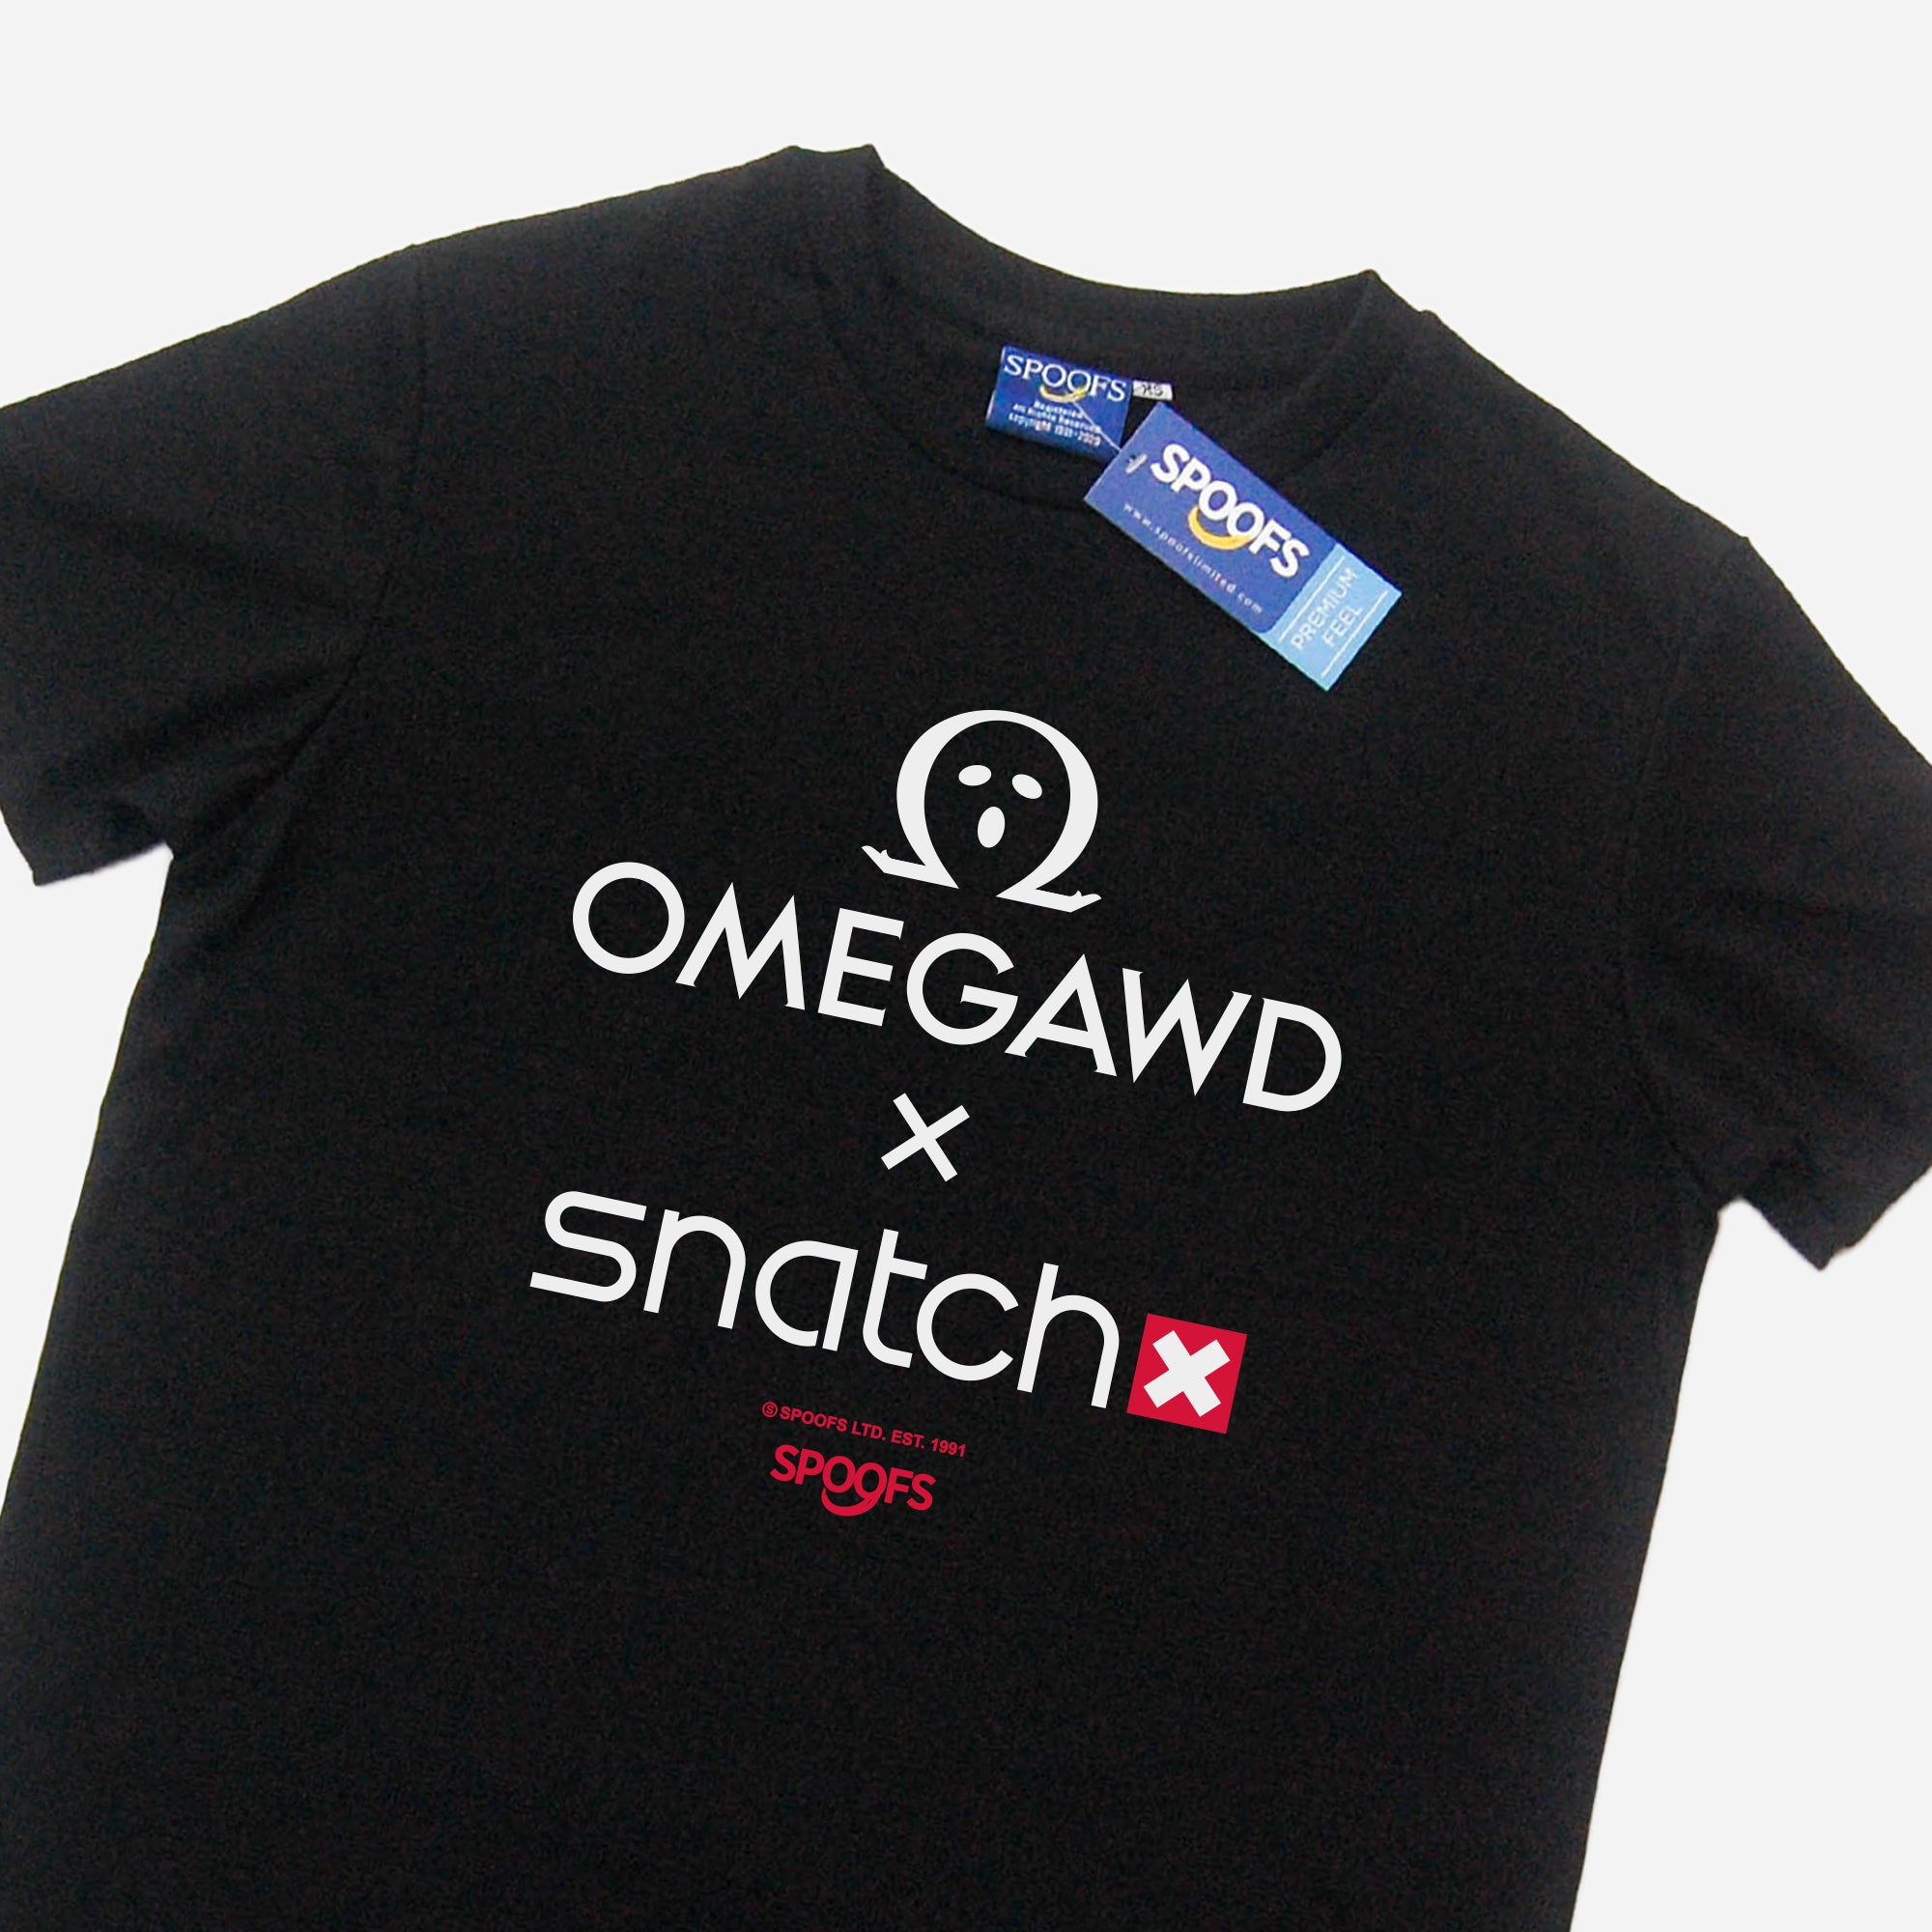 Omegawd x Snatch (Black)